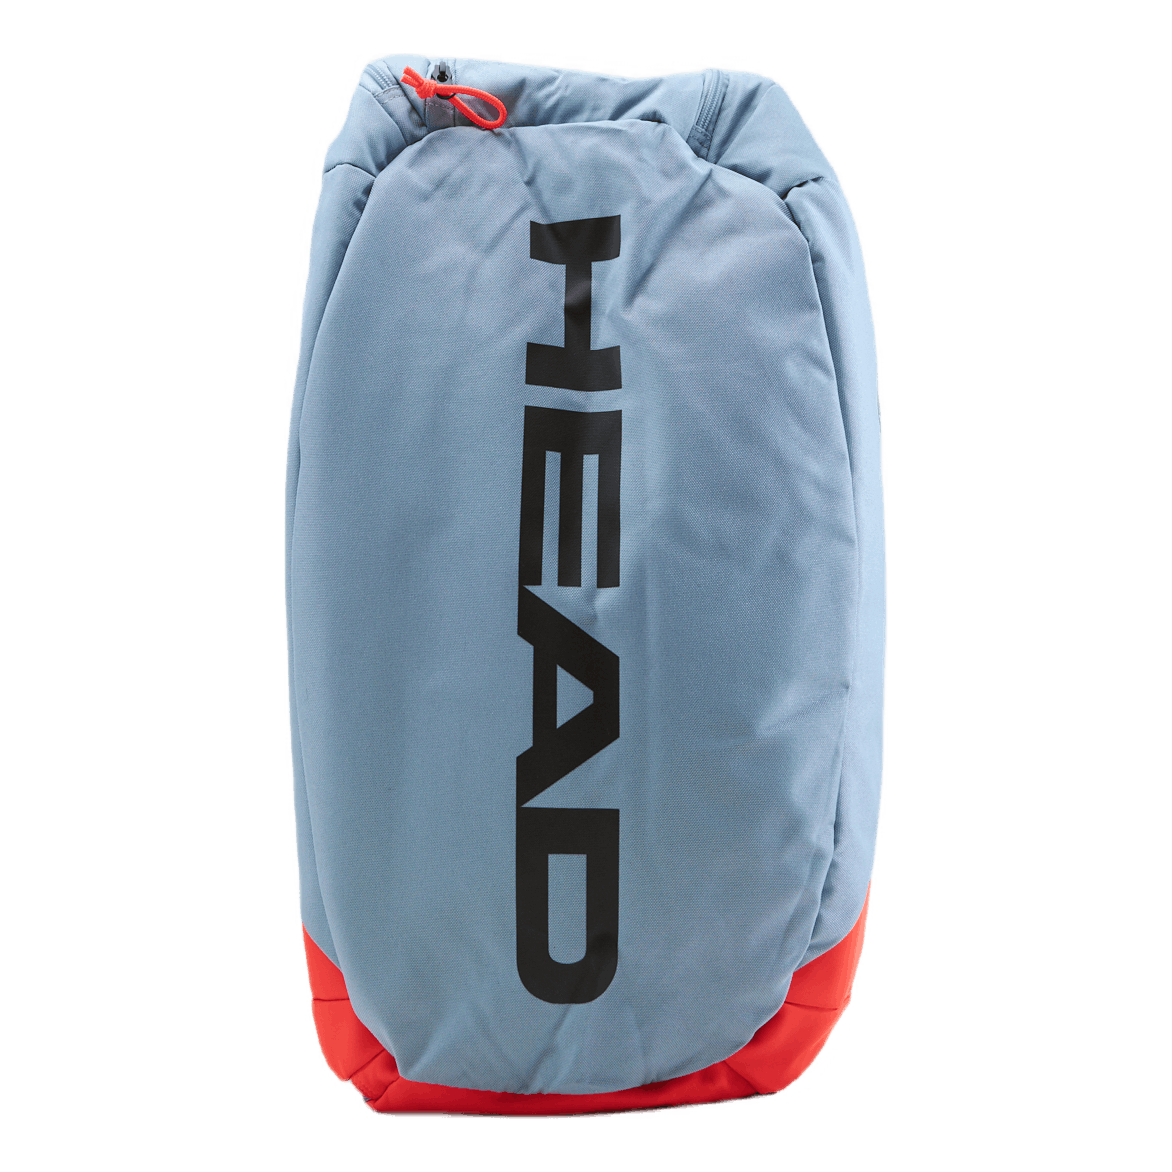 HEAD Delta Sports Bag - Grey, Orange online